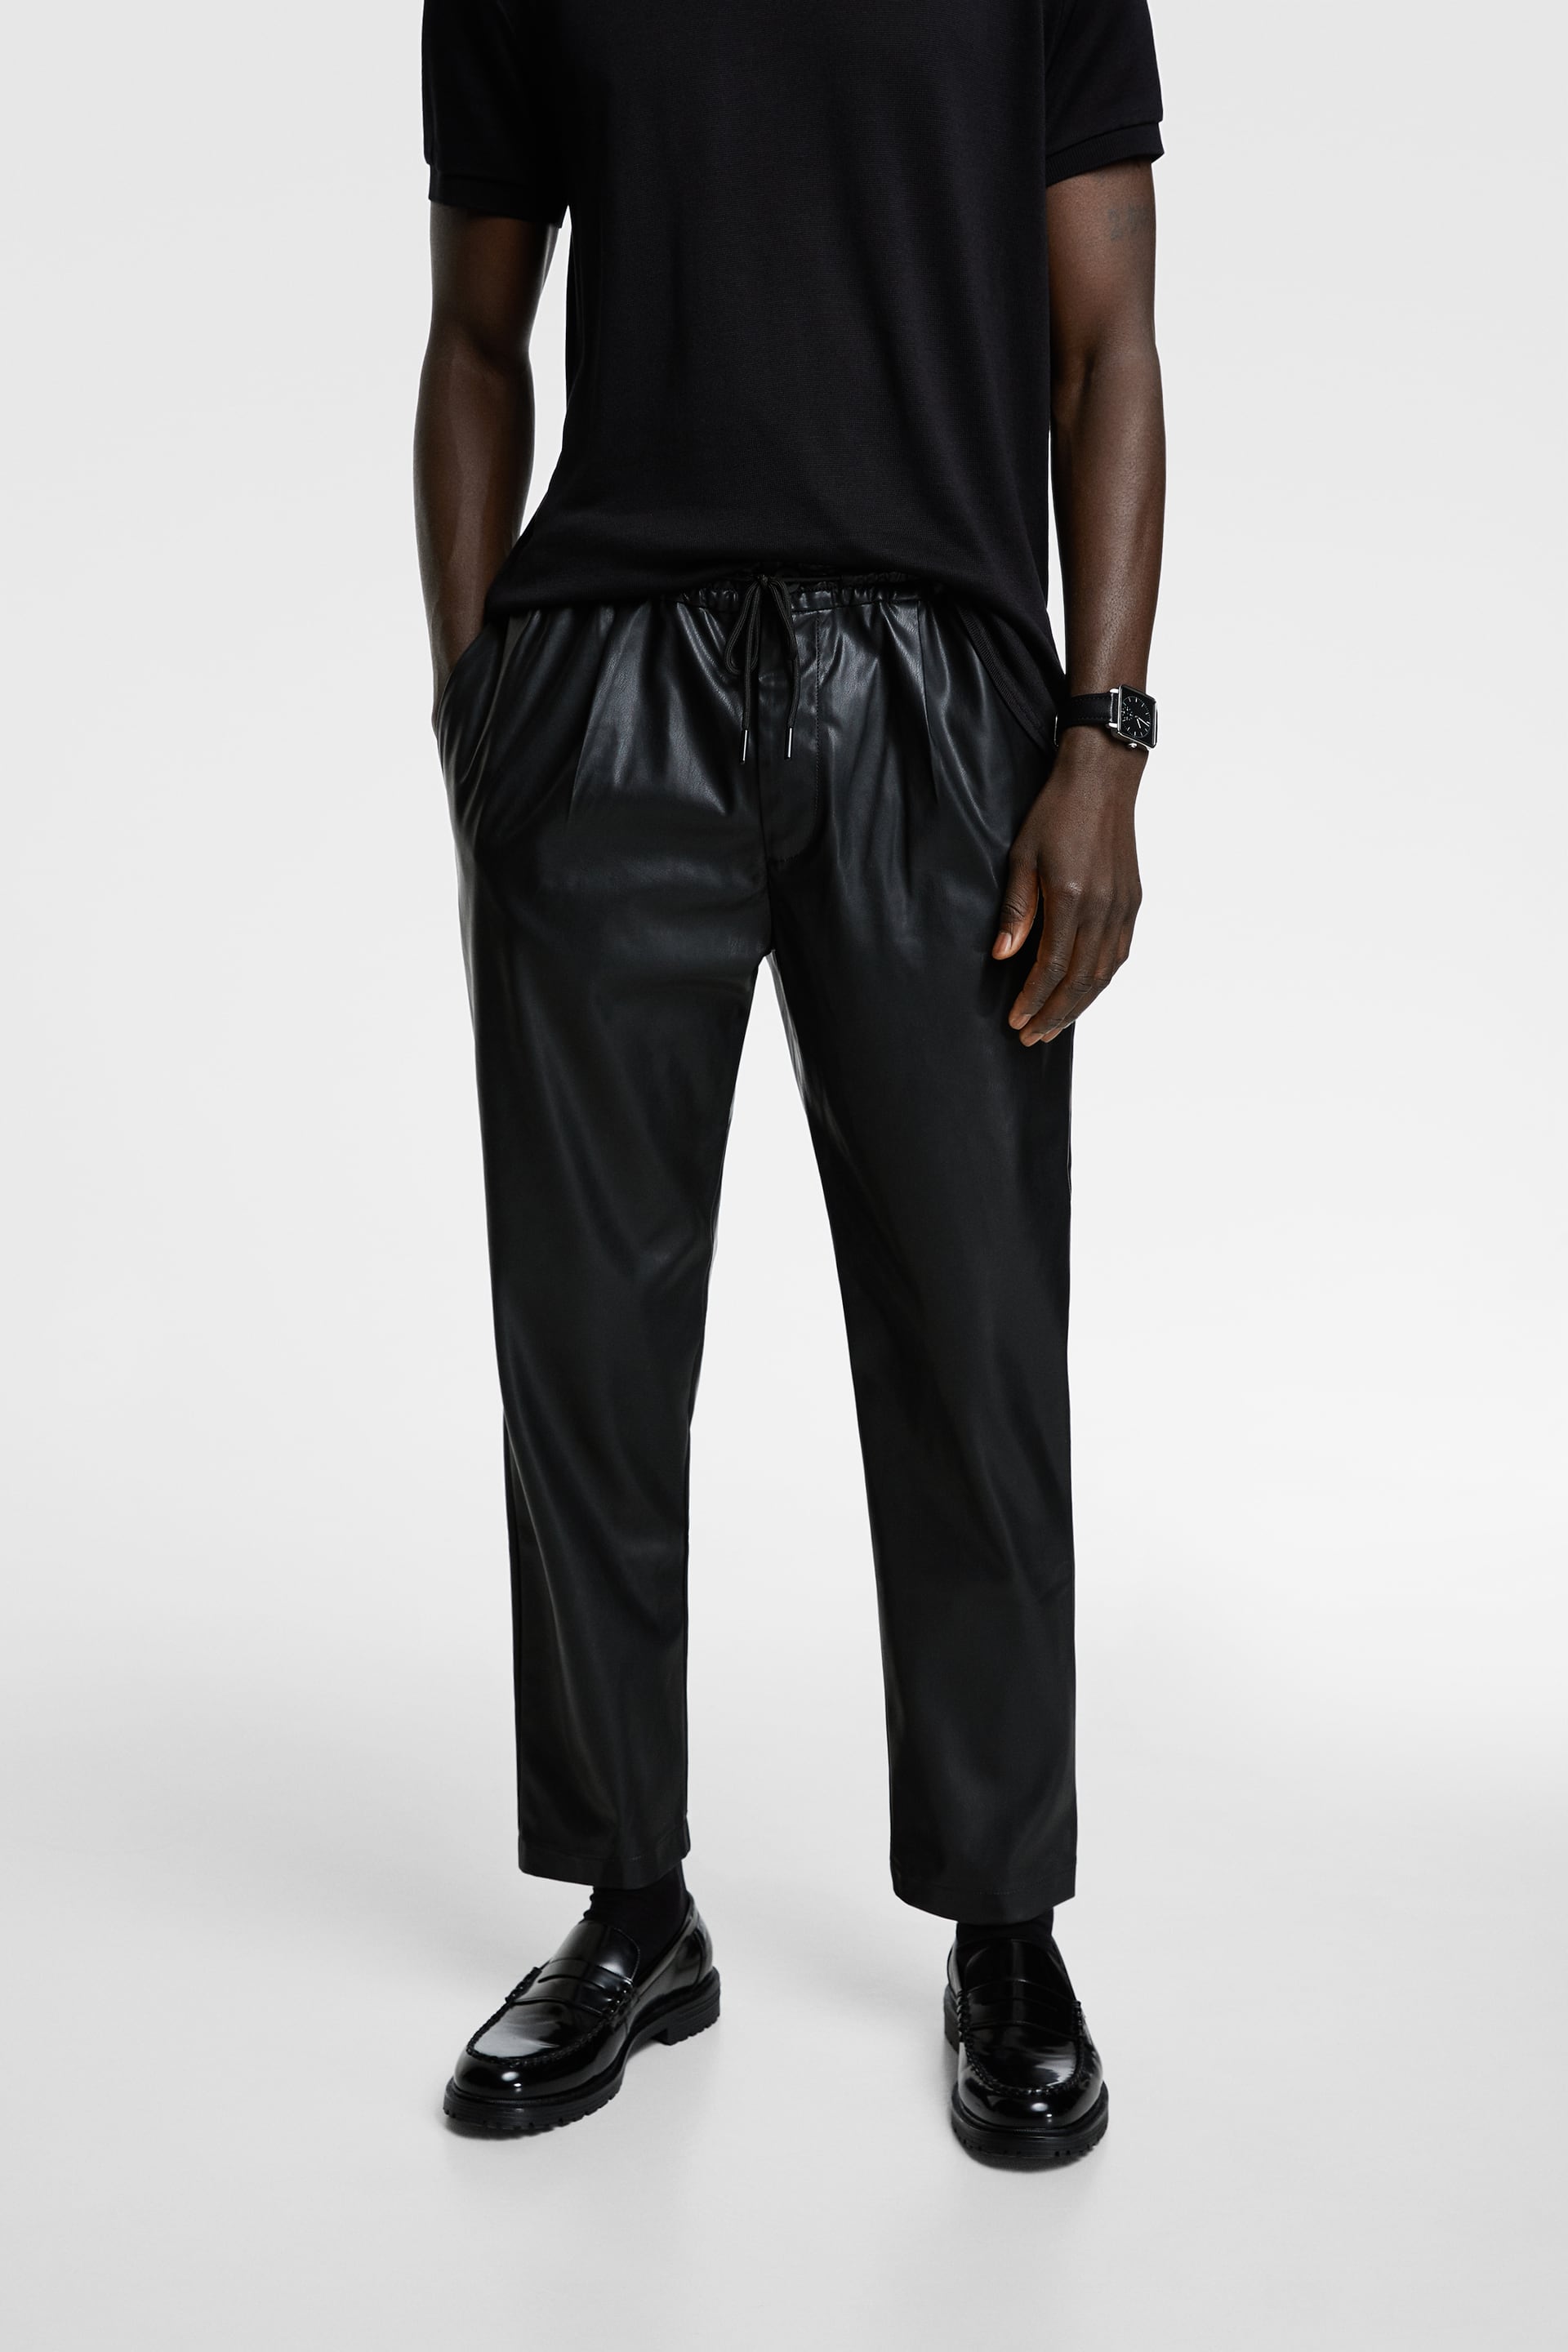 Men's Leather Trousers - Trending now | VanityForbes